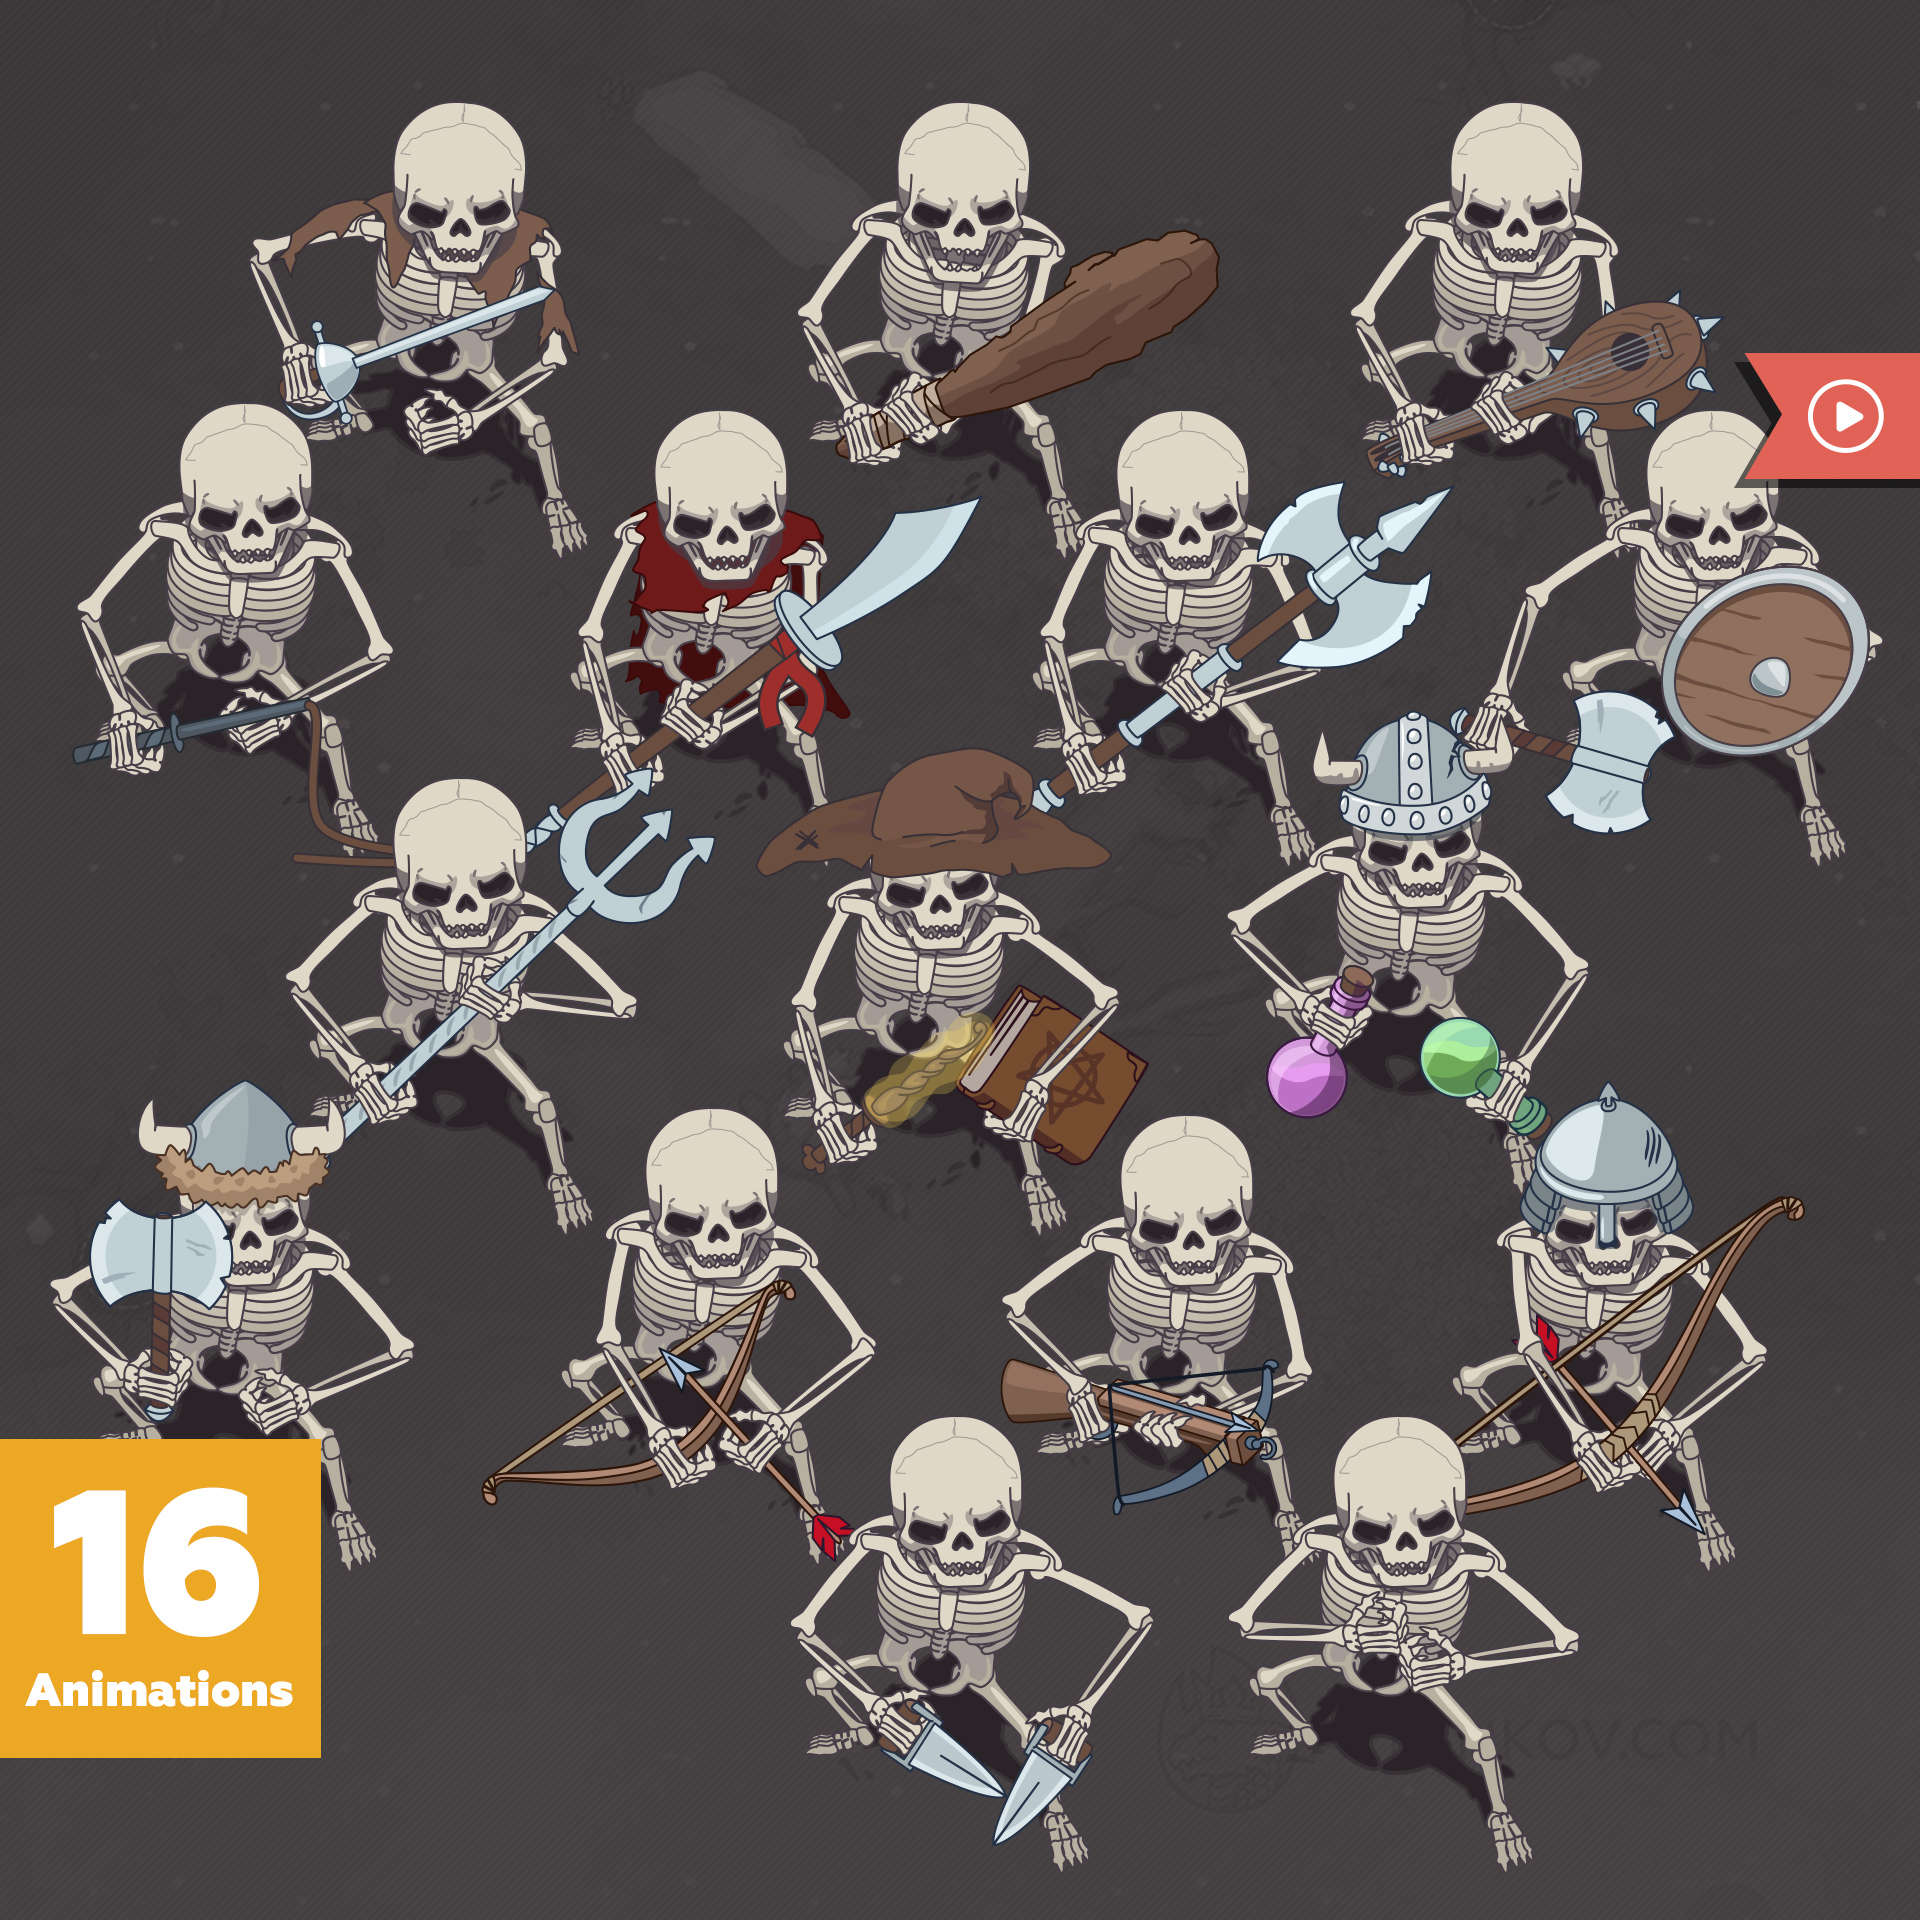 Skeletons/Undead Animated DnD token set.